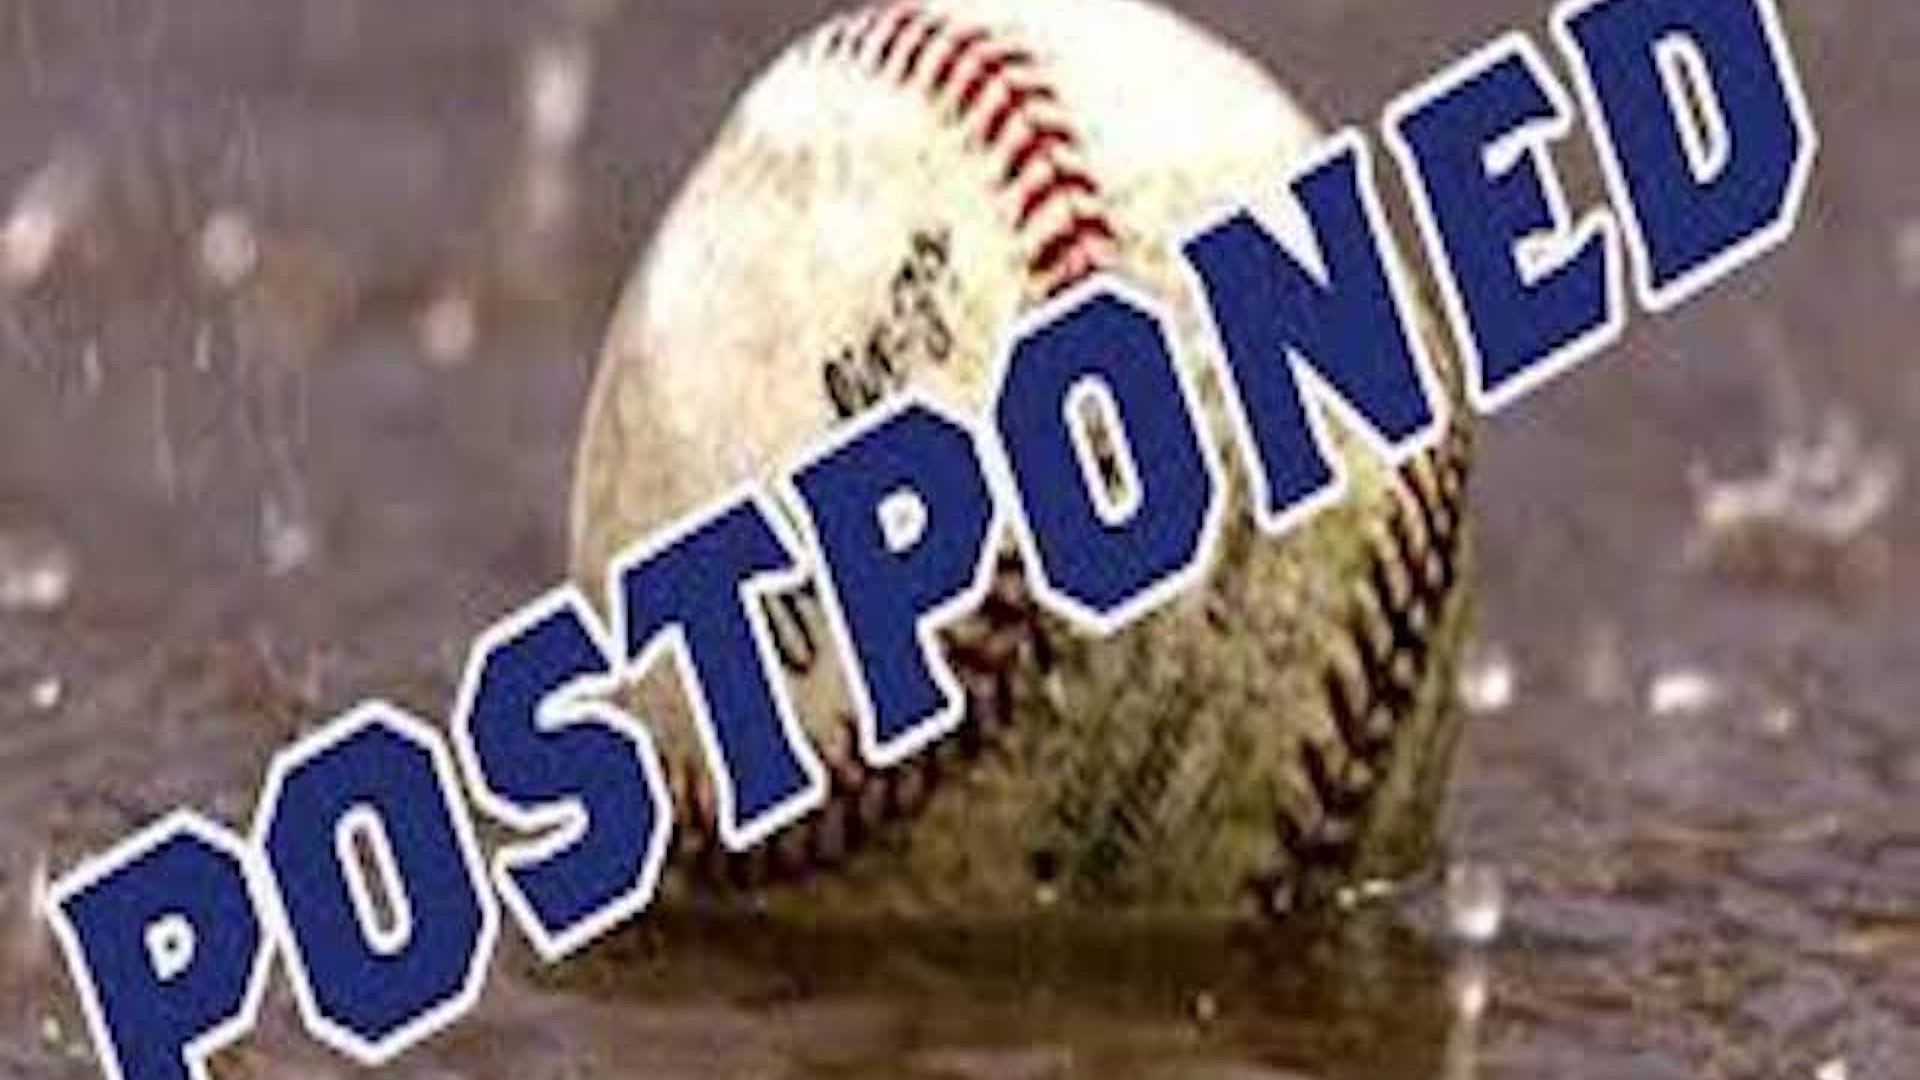 Slide 6 - Dragon Baseball game for tonight, postponed until tomorrow